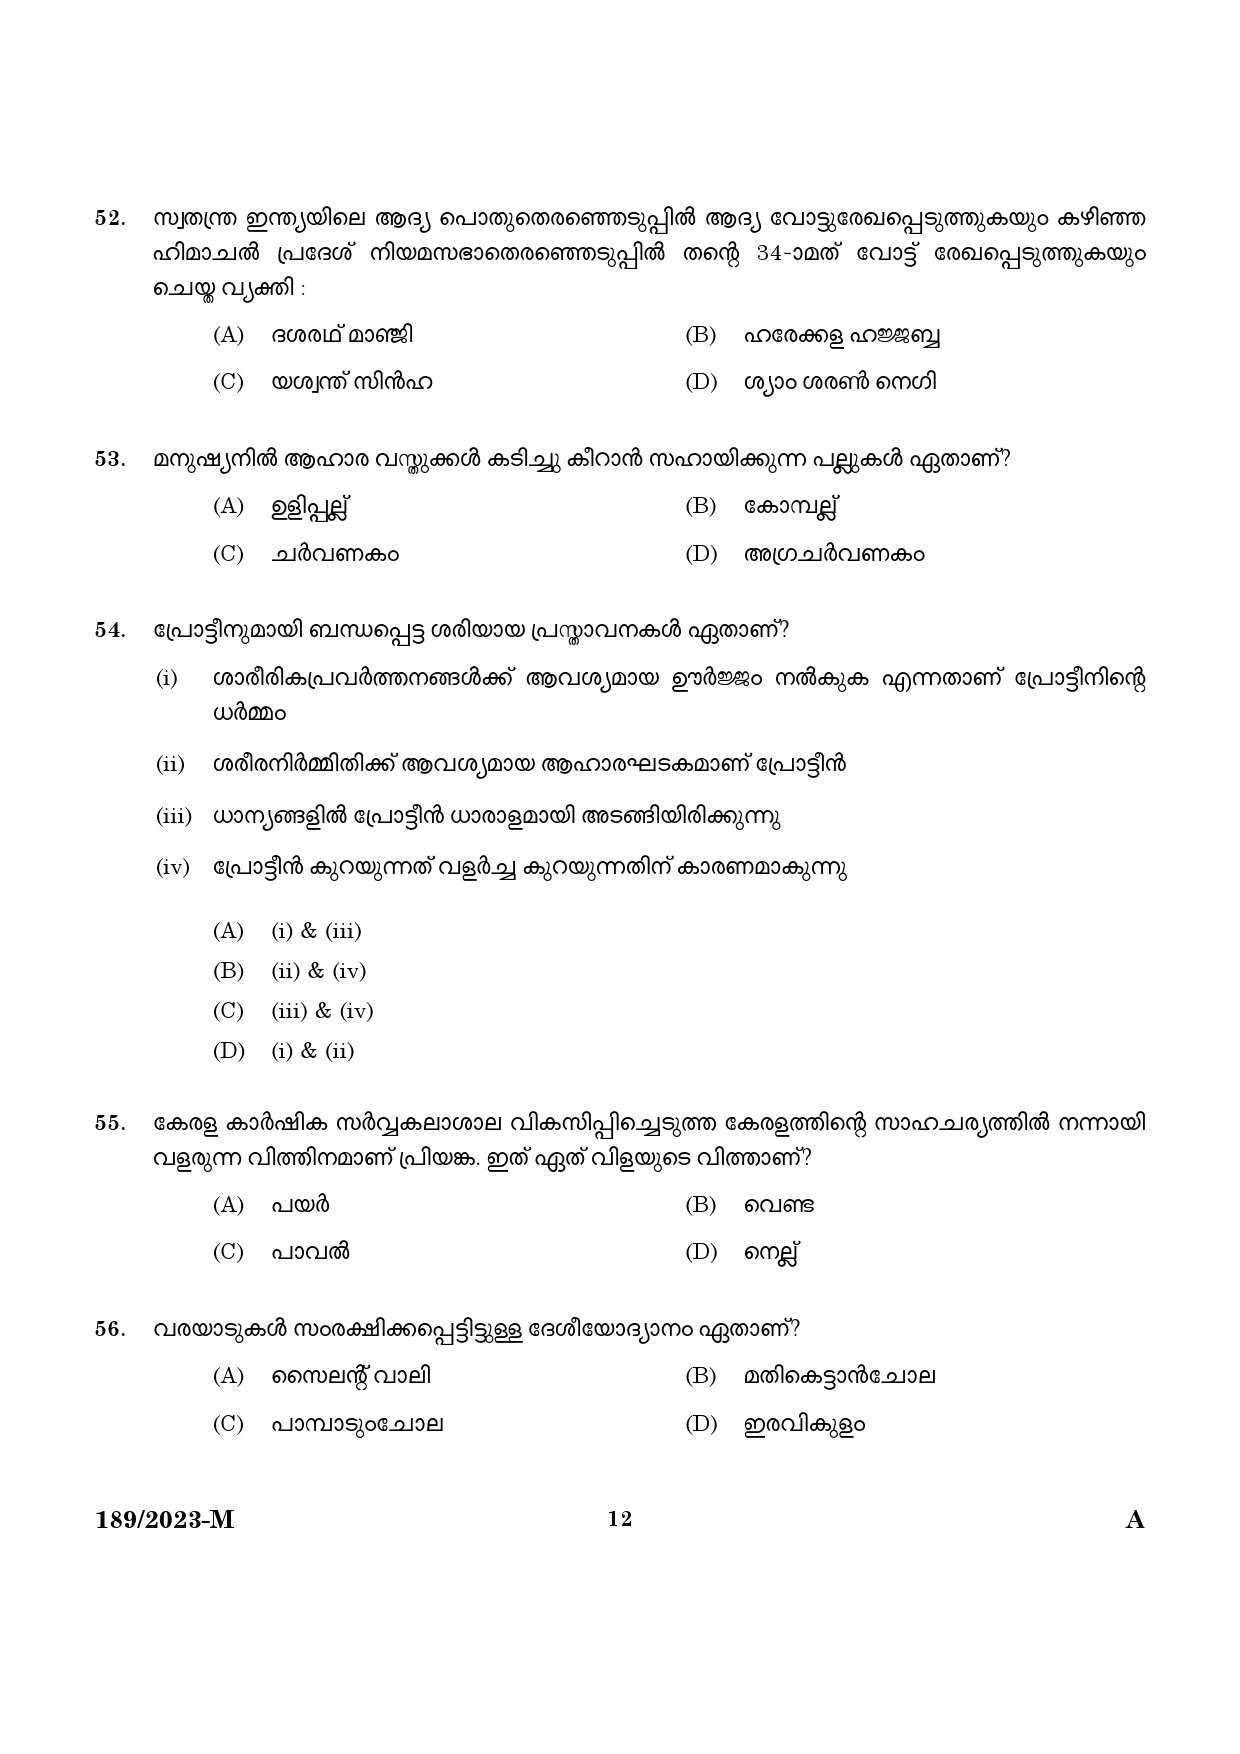 KPSC LGS Malayalam Exam 2023 Code 1892023 M 10